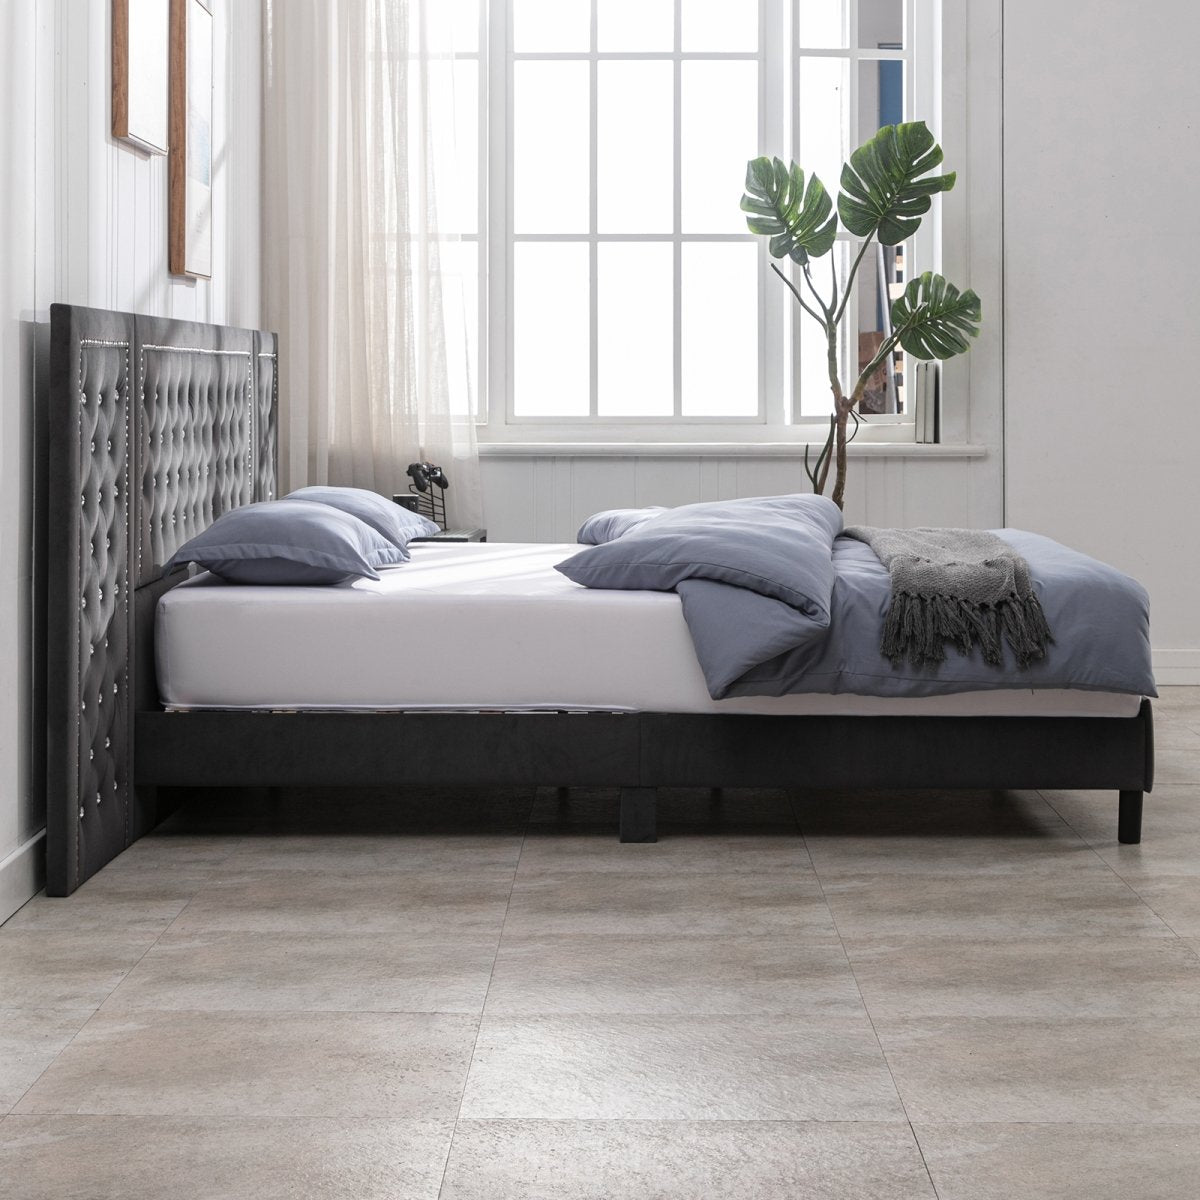 Bed Frame | Velvet Eastern Platform Bed with Button Tufted and Hand-Applied Nail Heads Design - Mjkonebed frame